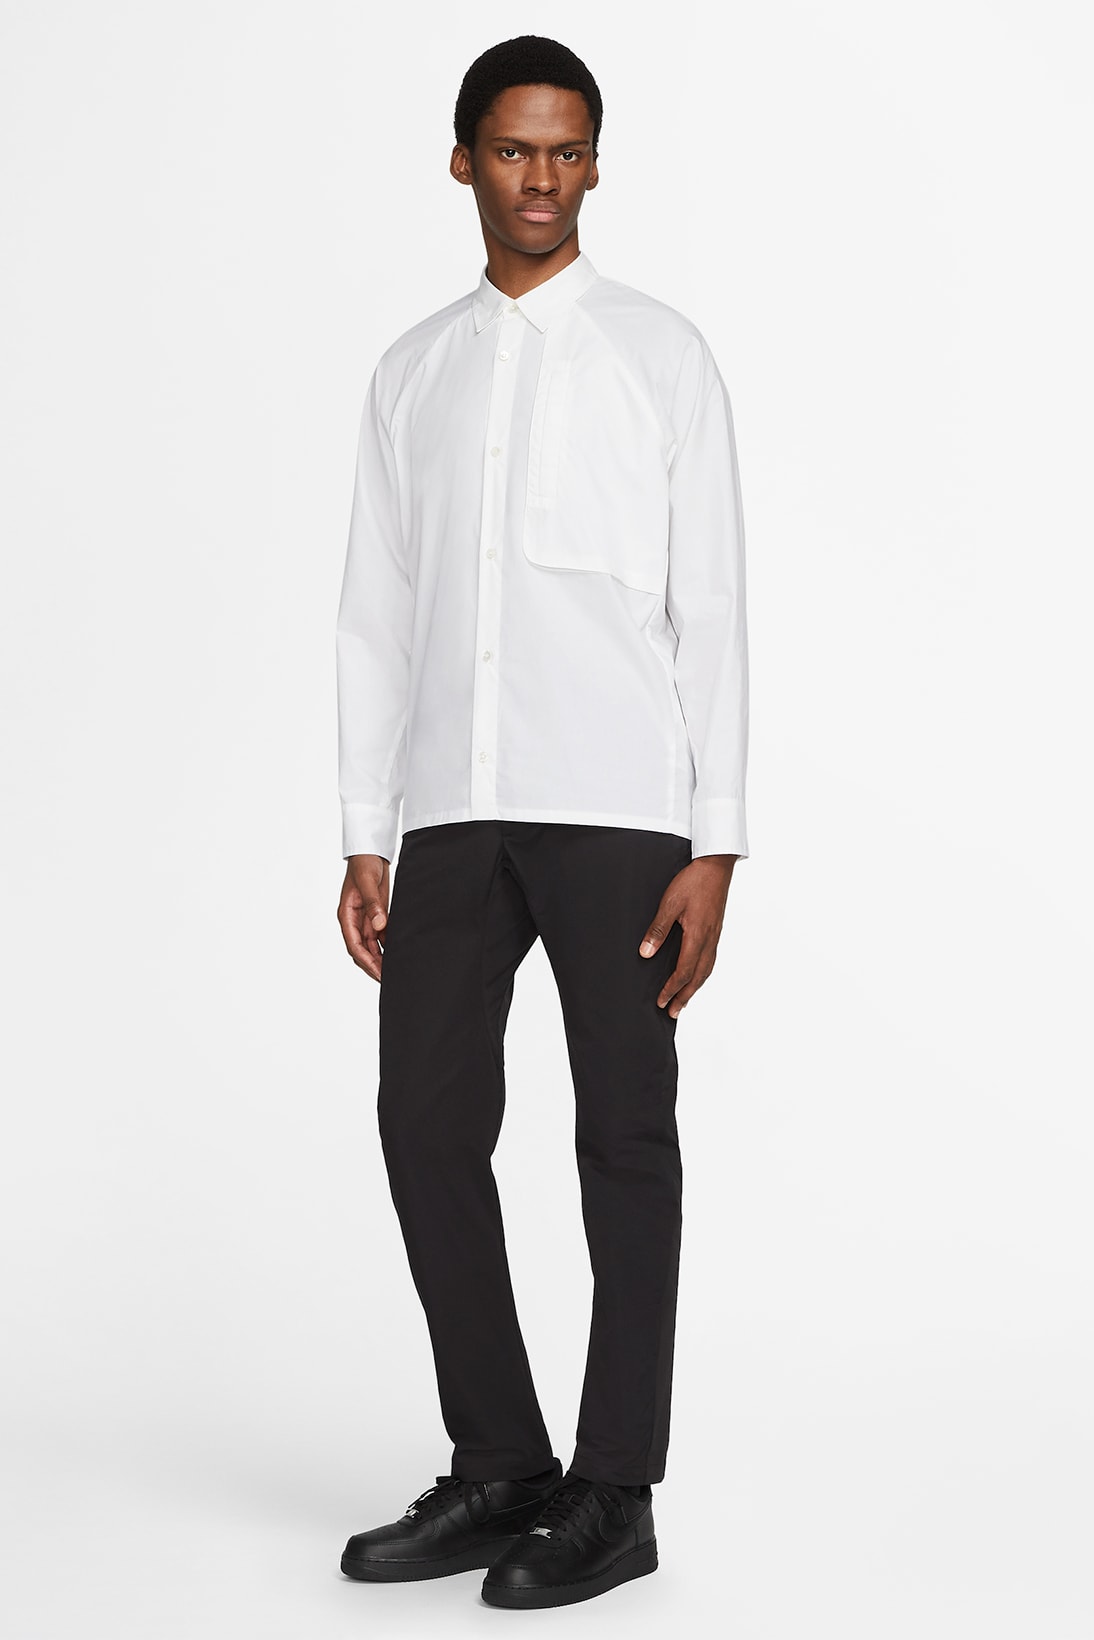 nike design exploration apparel collection long sleeve shirt pants